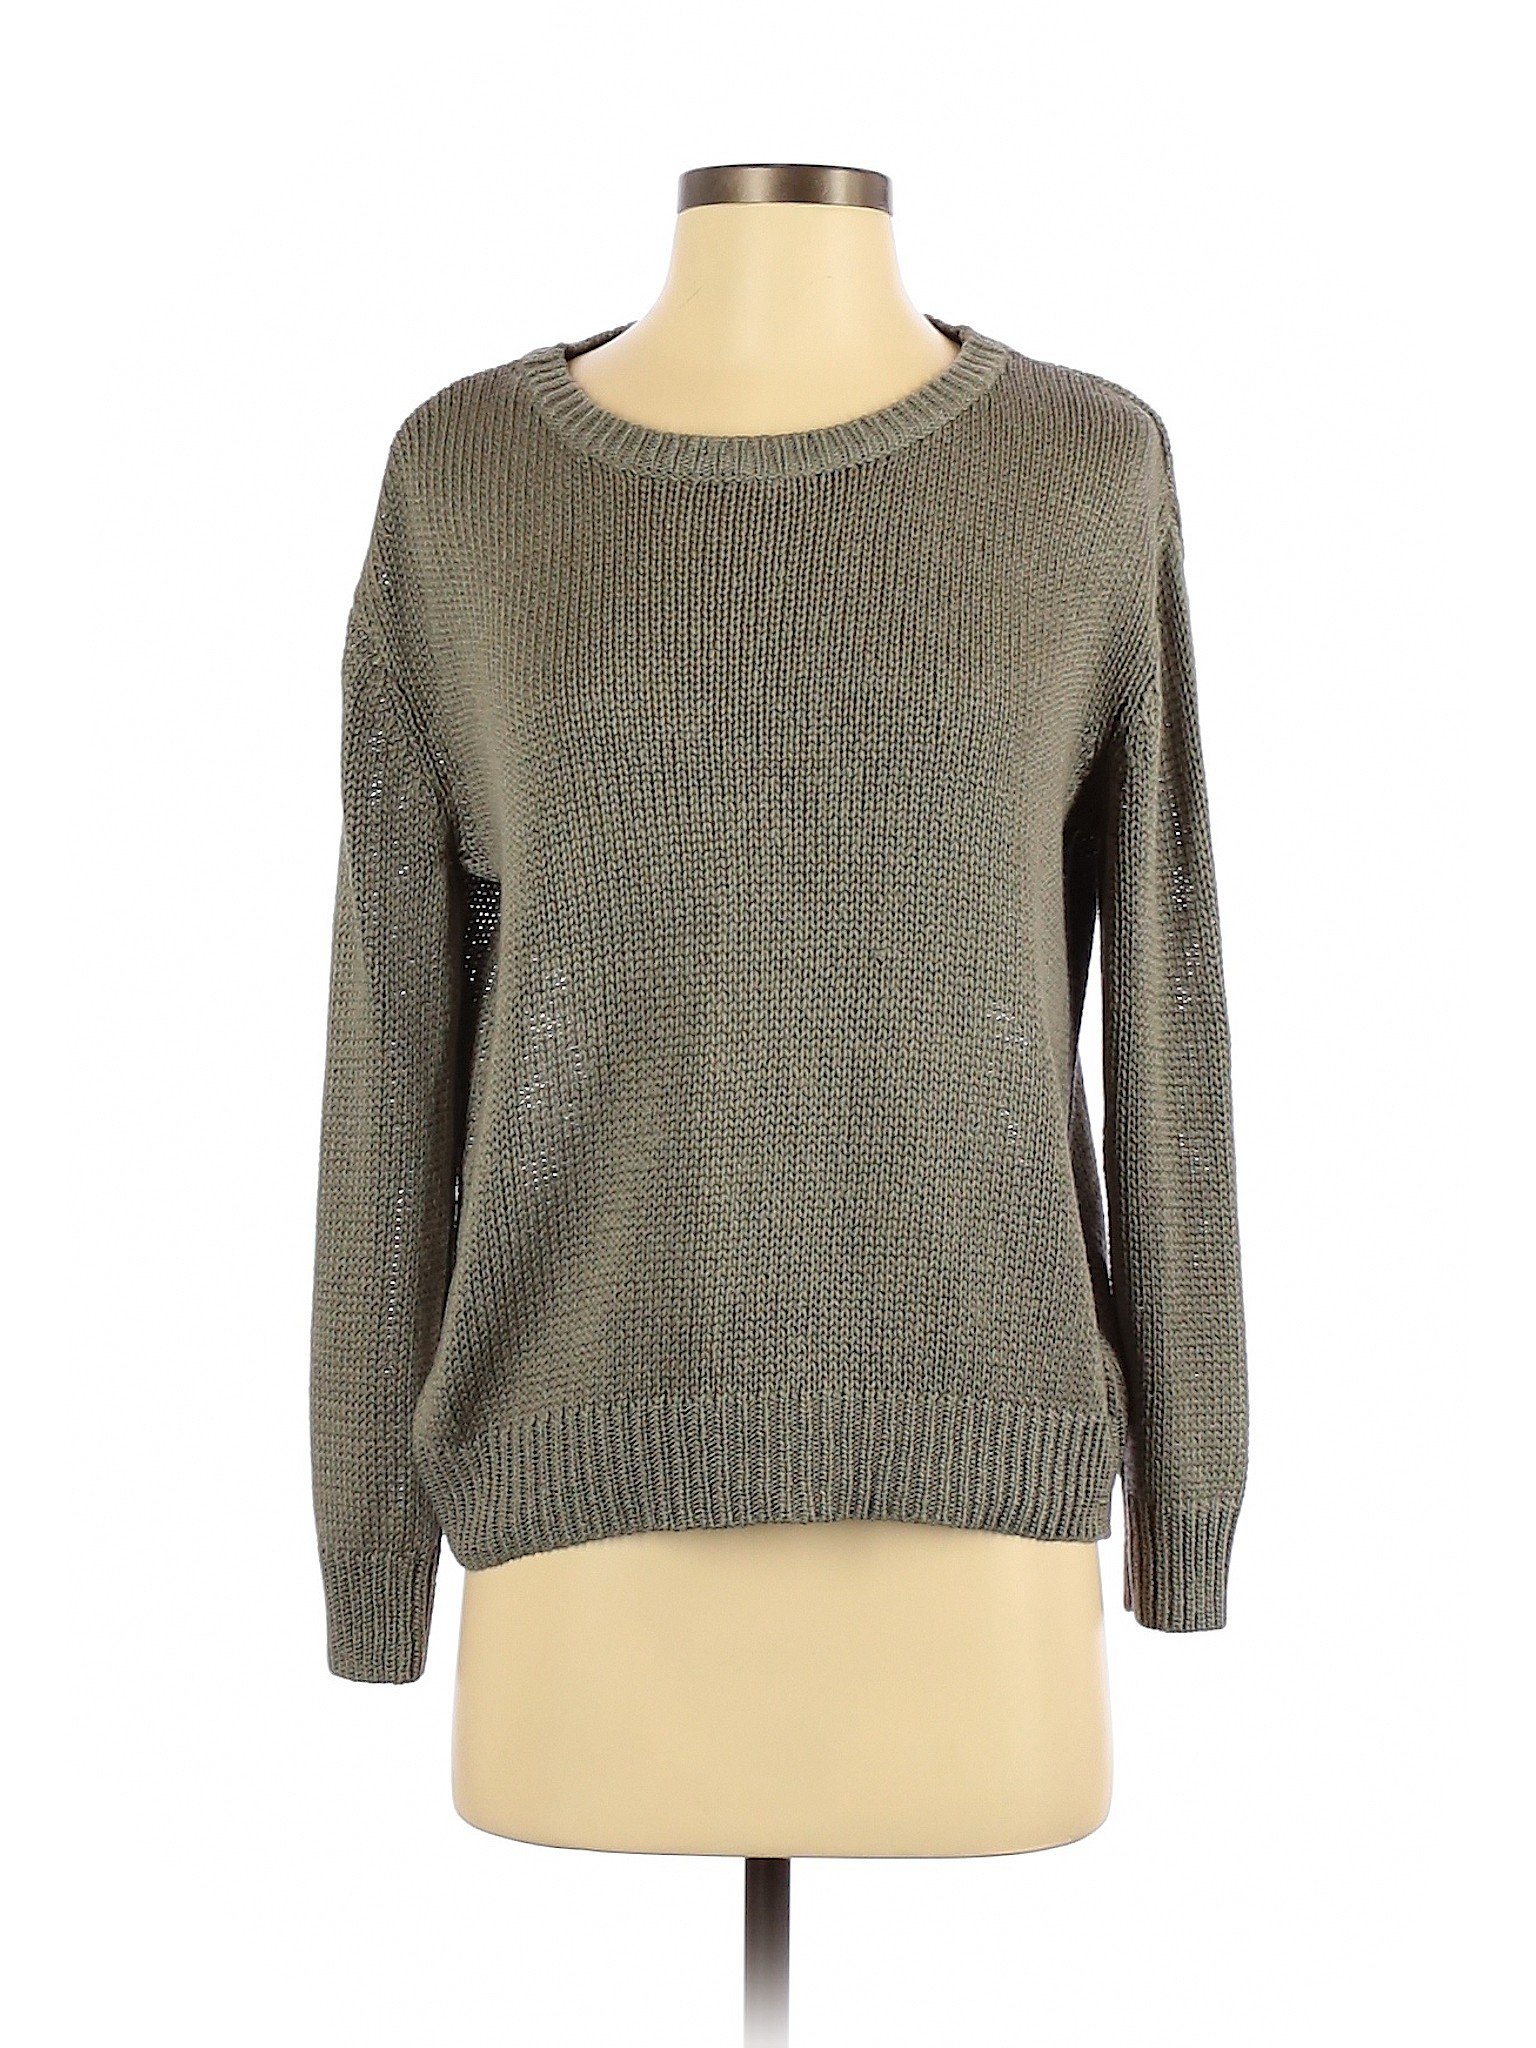 H&M Women Green Pullover Sweater S | eBay